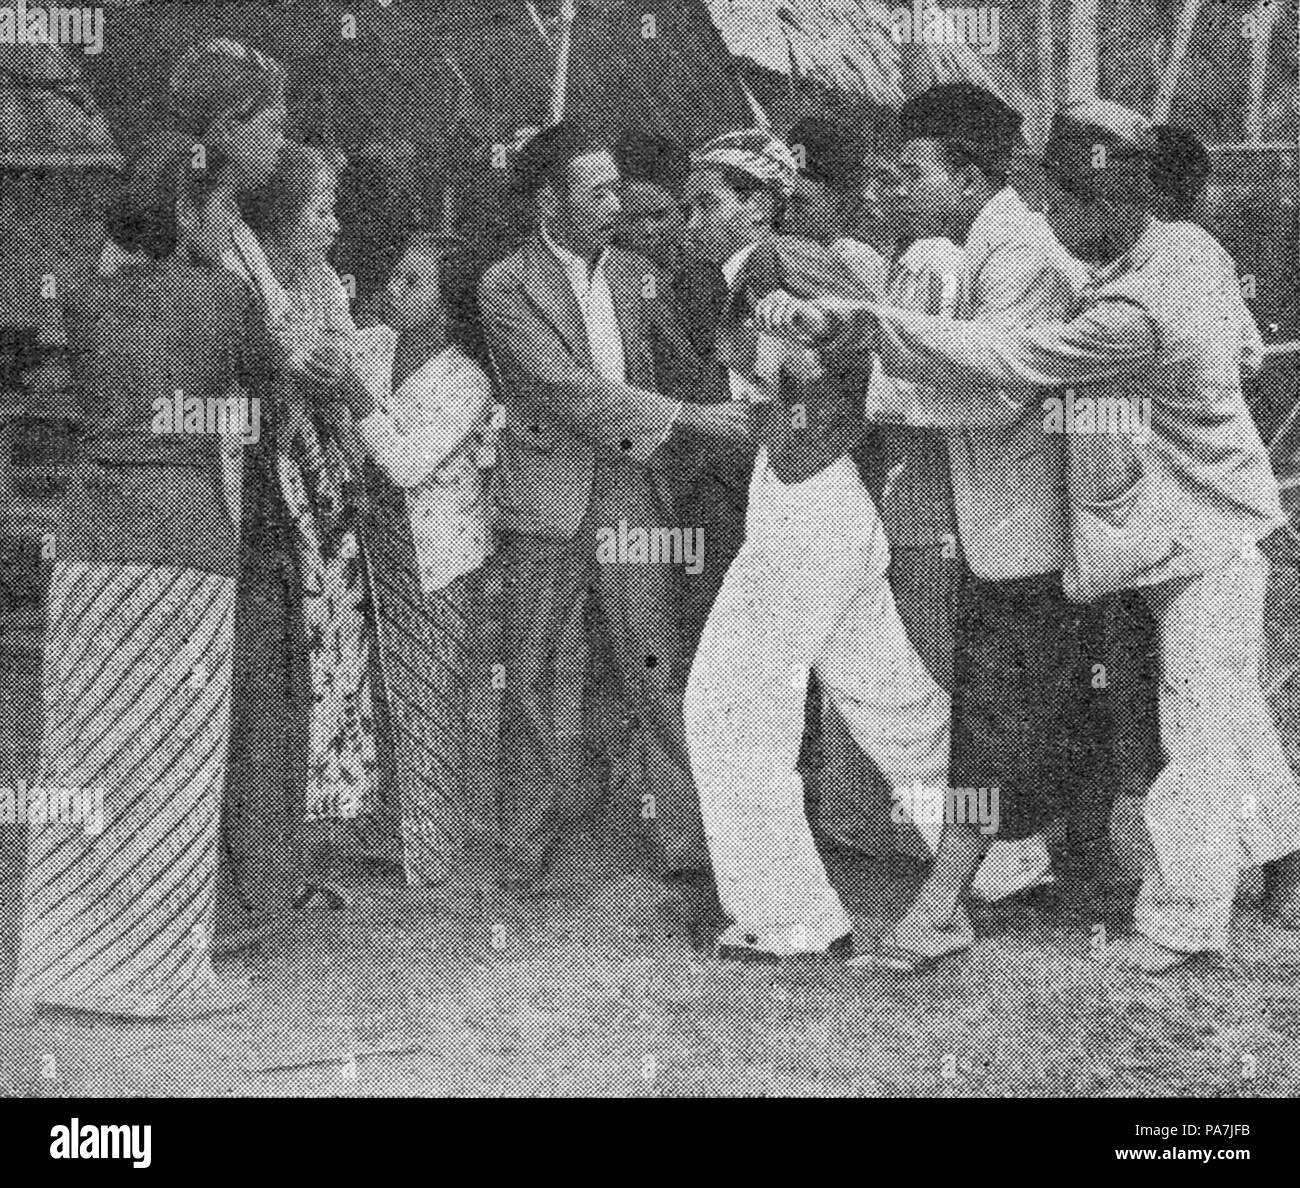 60 Darma punching Soemengkar, Pantjawarna, p66 Stock Photo